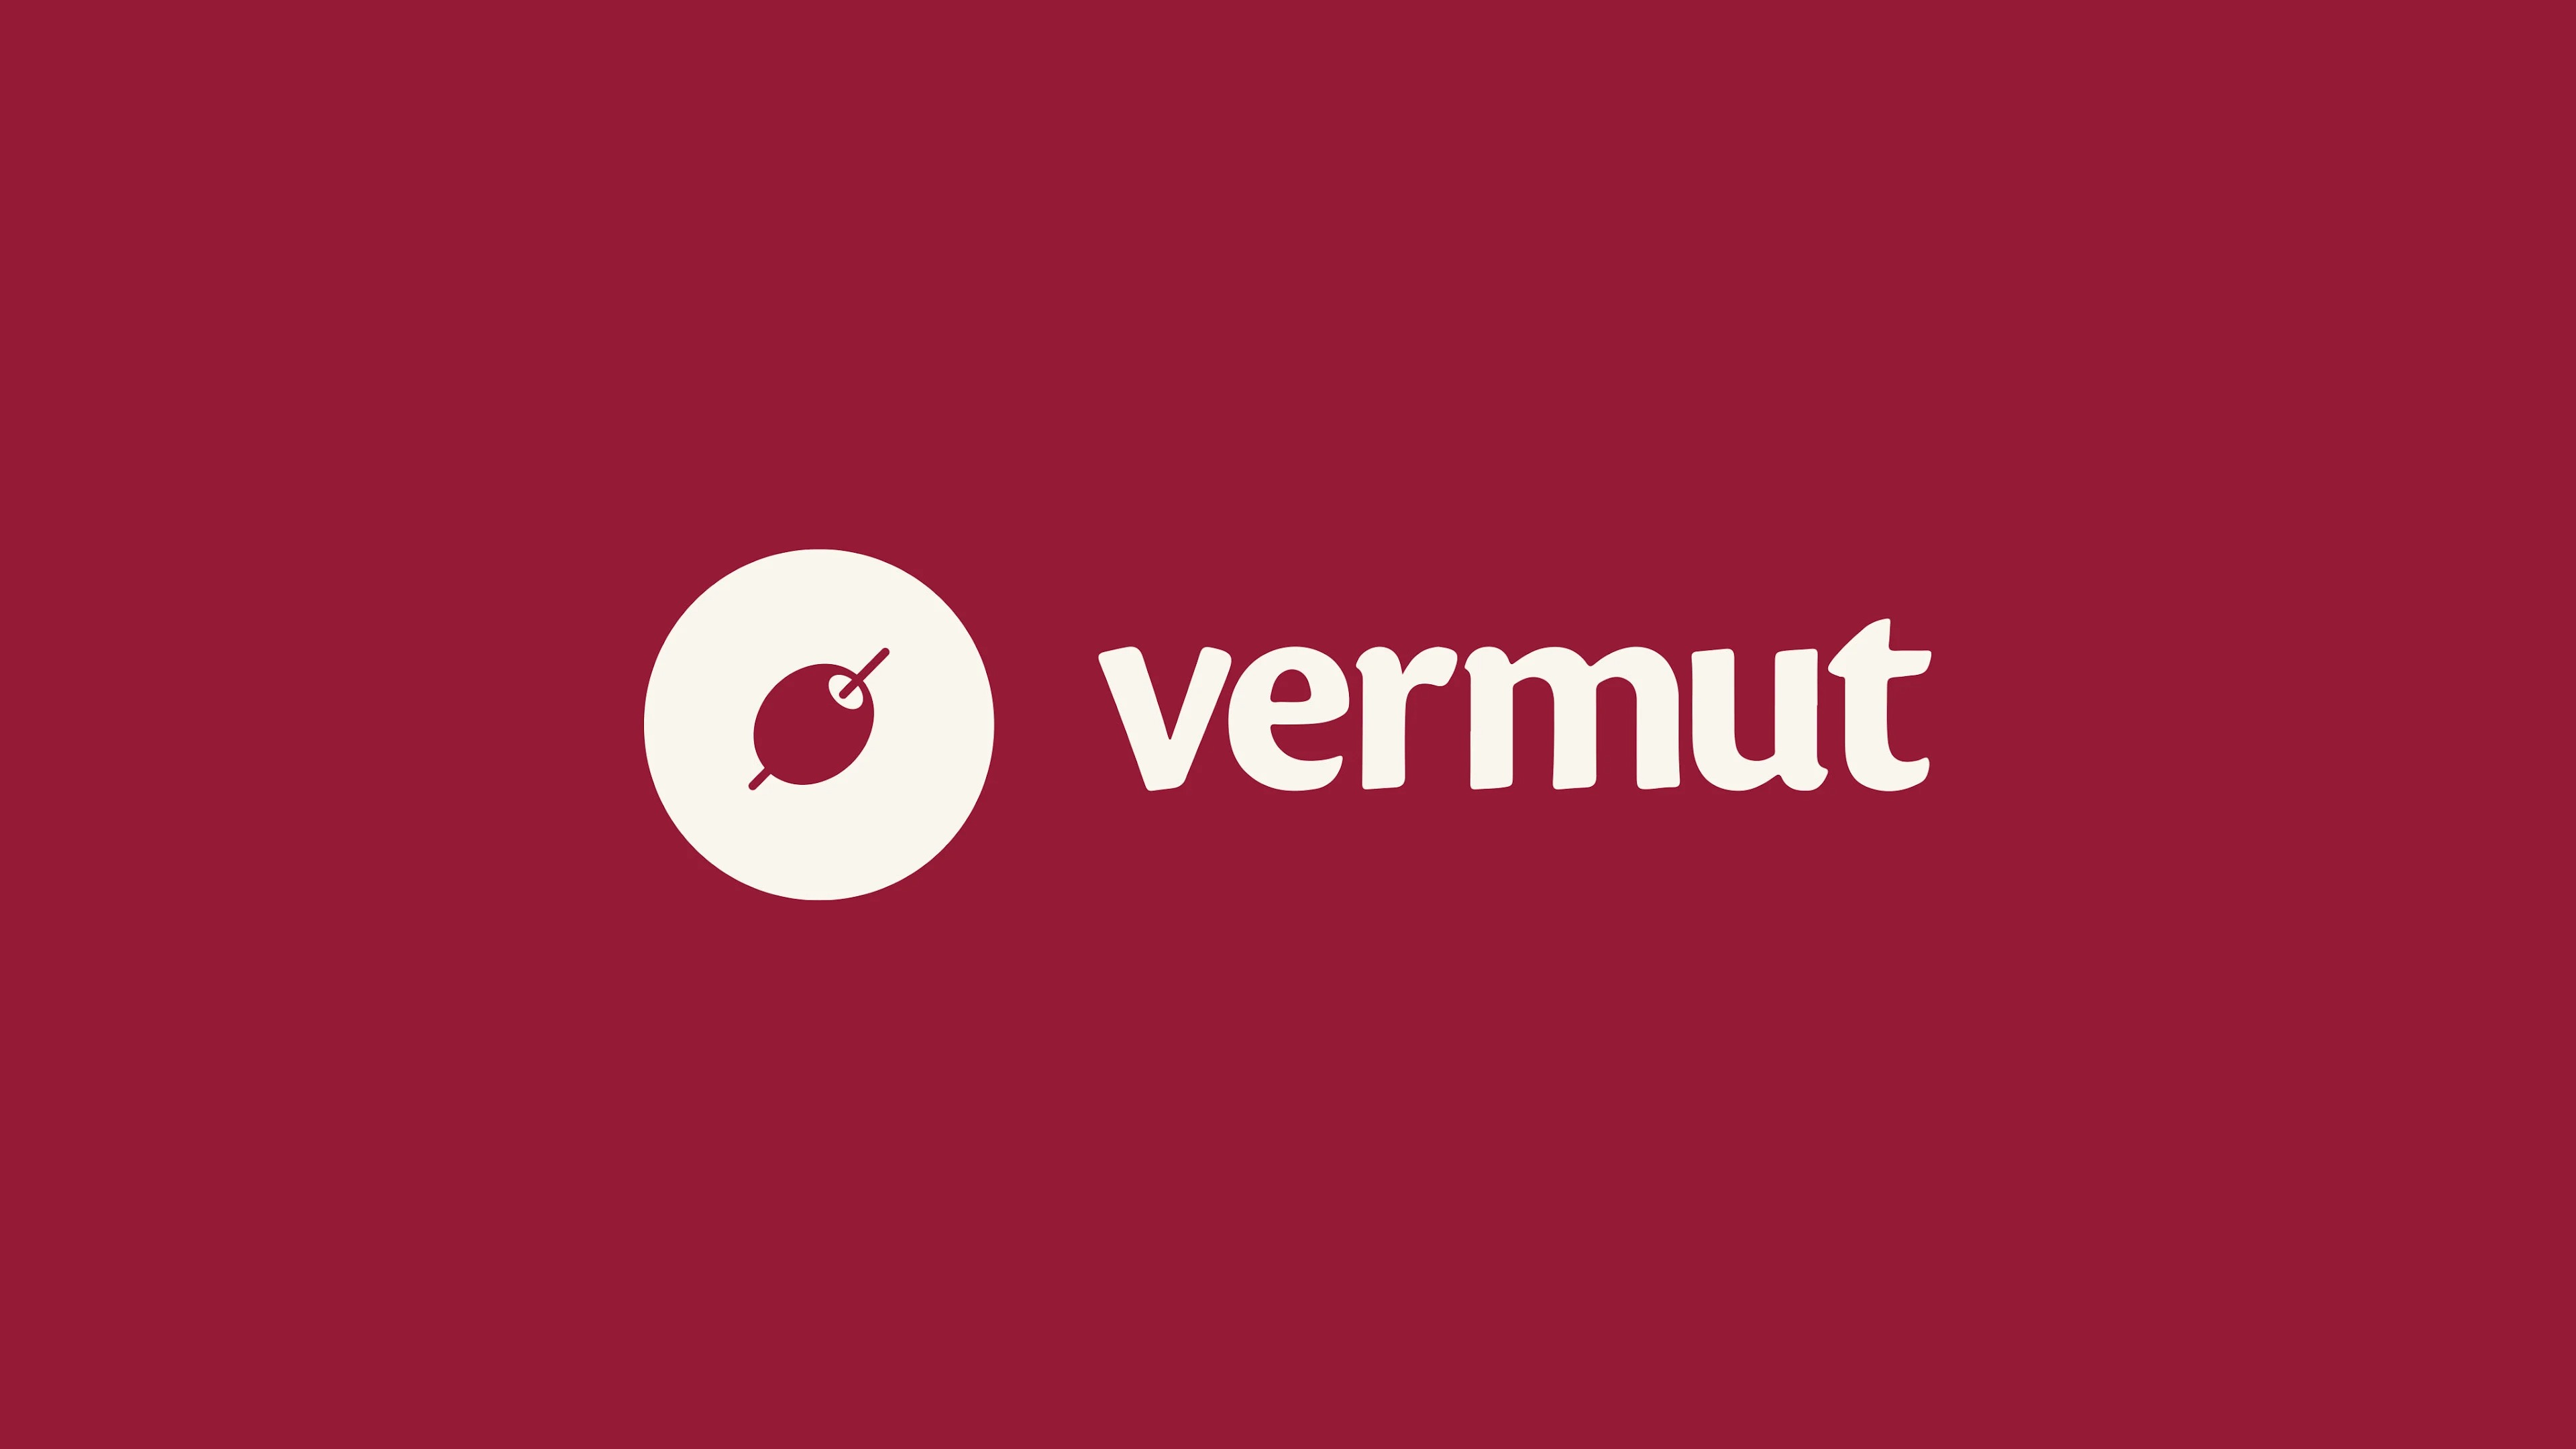 vermouth application